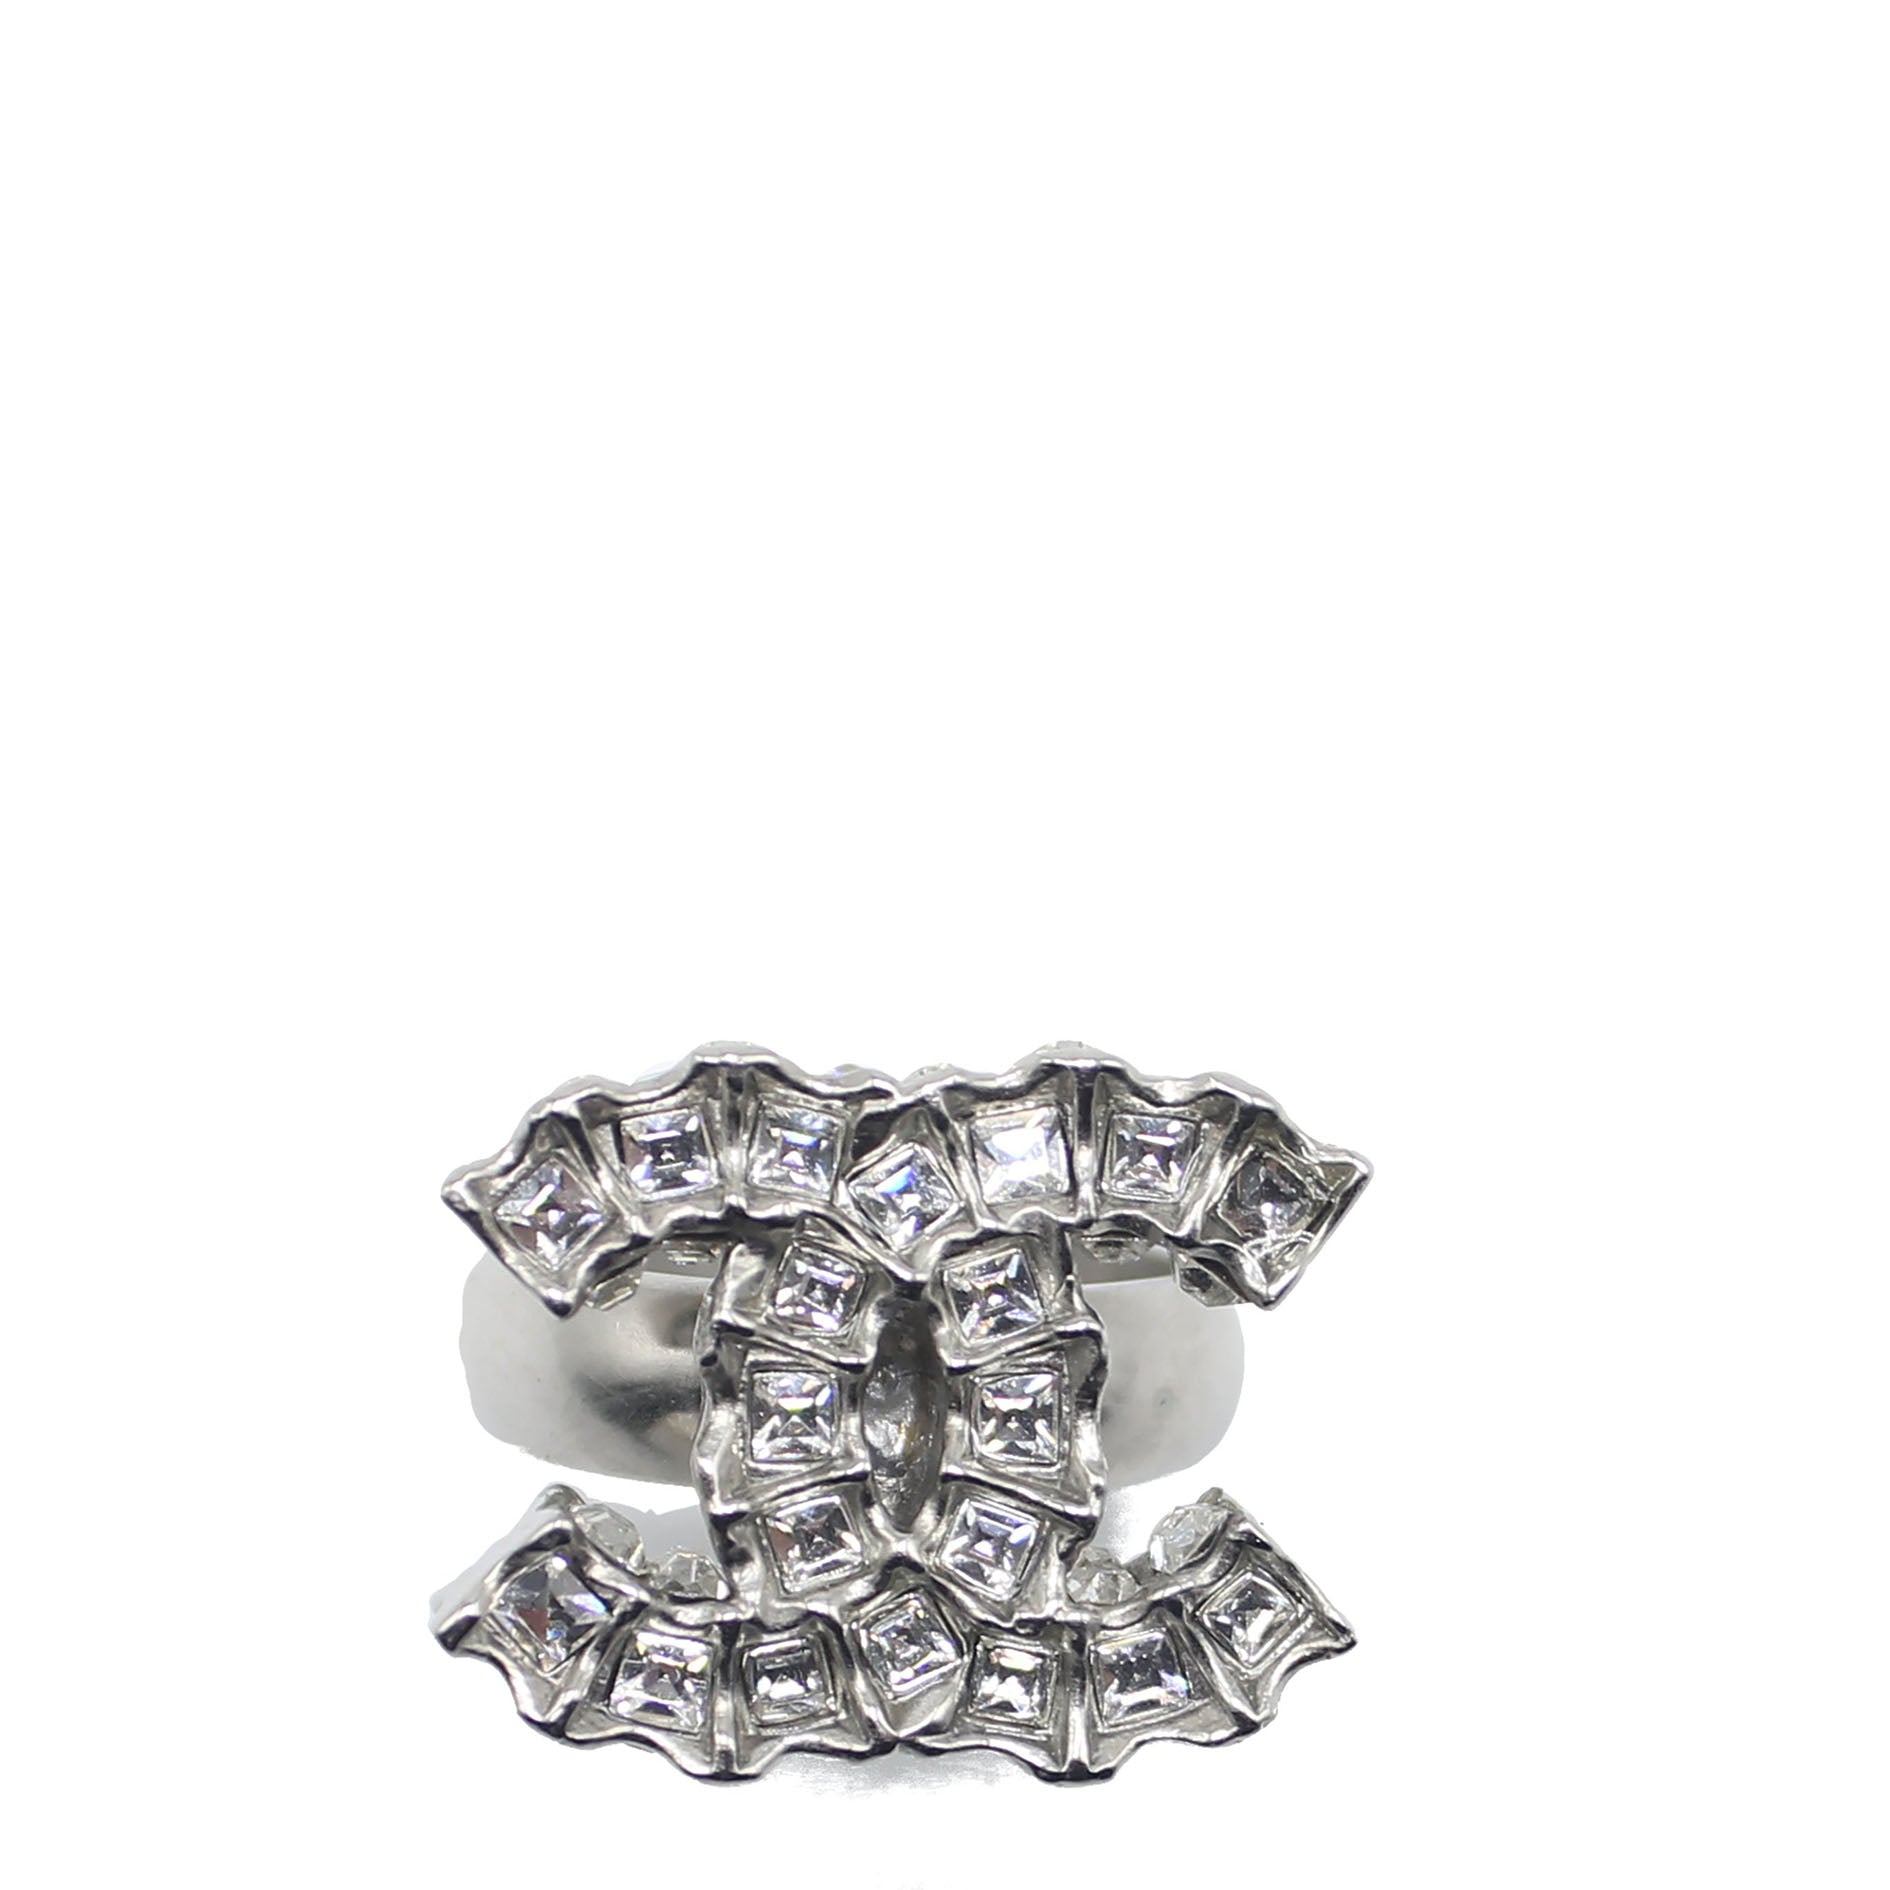 CHANEL  Jewelry  Chanel Ring 55  Poshmark